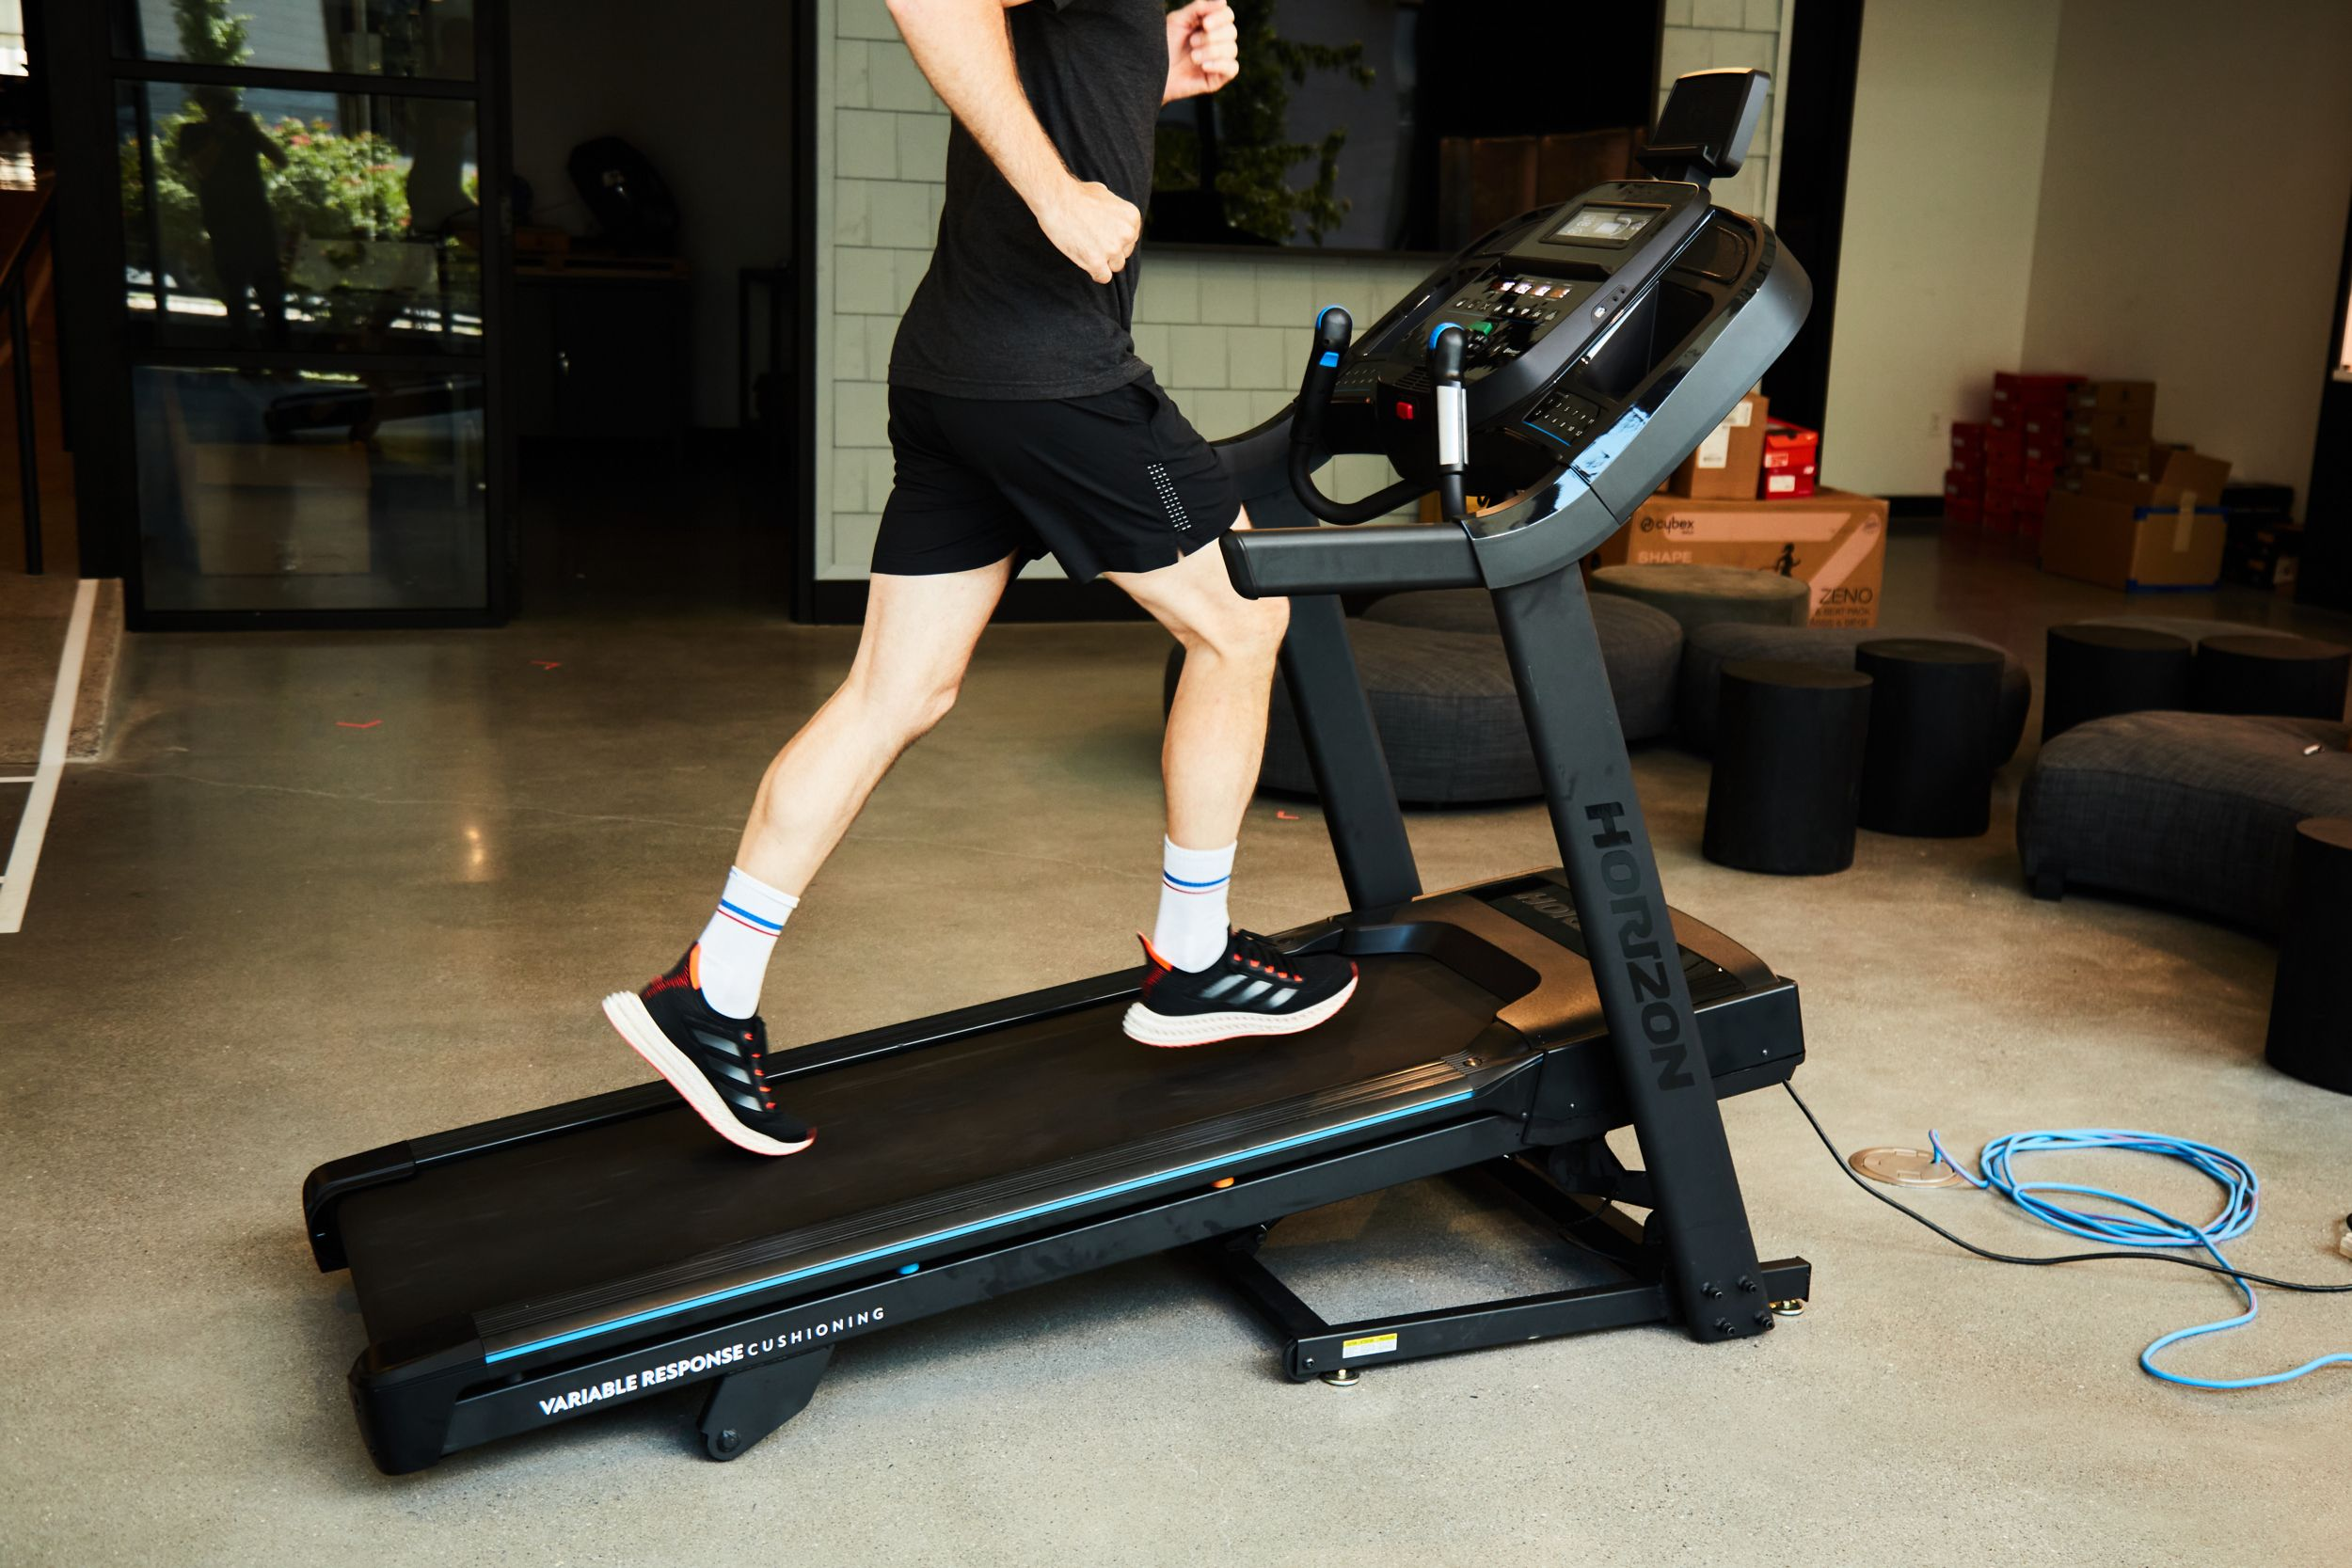 How does a treadmill work?